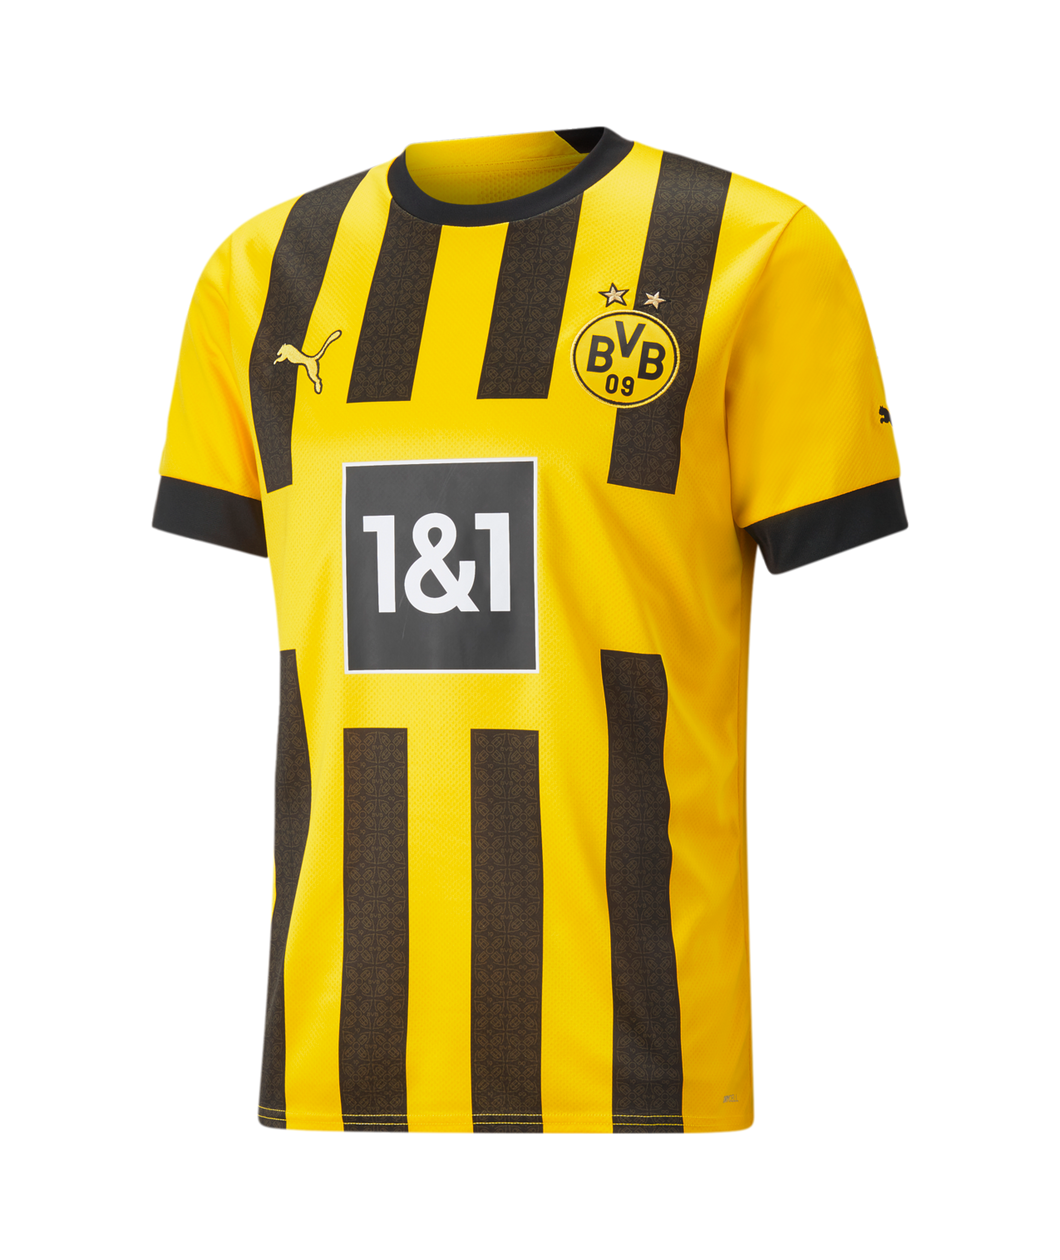 PUMA Borussia Dortmund Home Jersey Adult 765883 01 YELLOW/BLACK